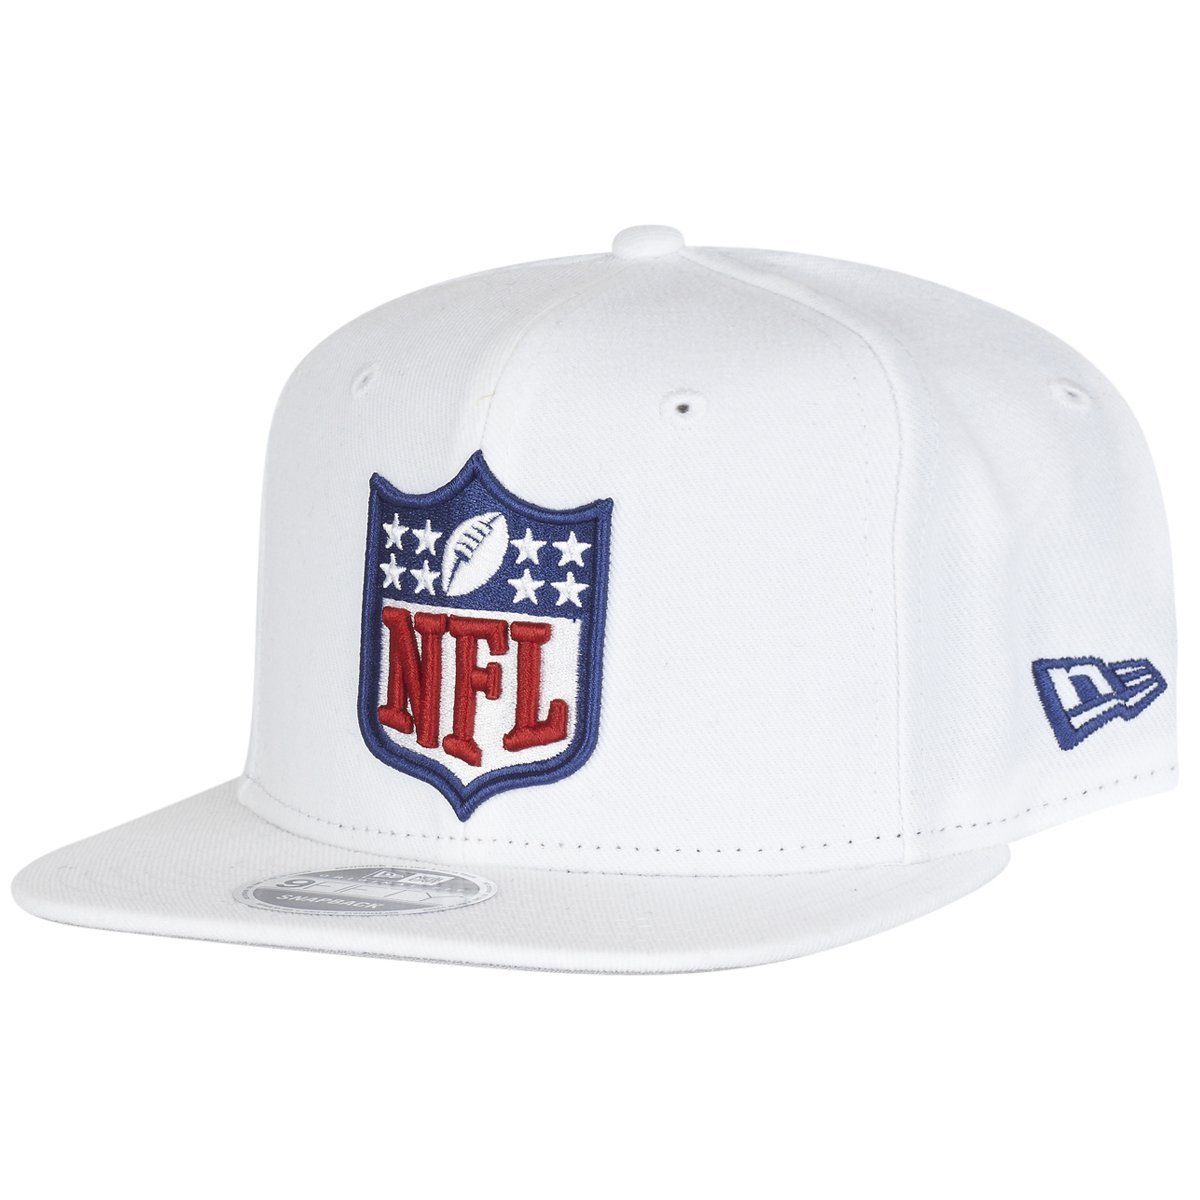 NFL Era Snapback Cap New 9Fifty Shield